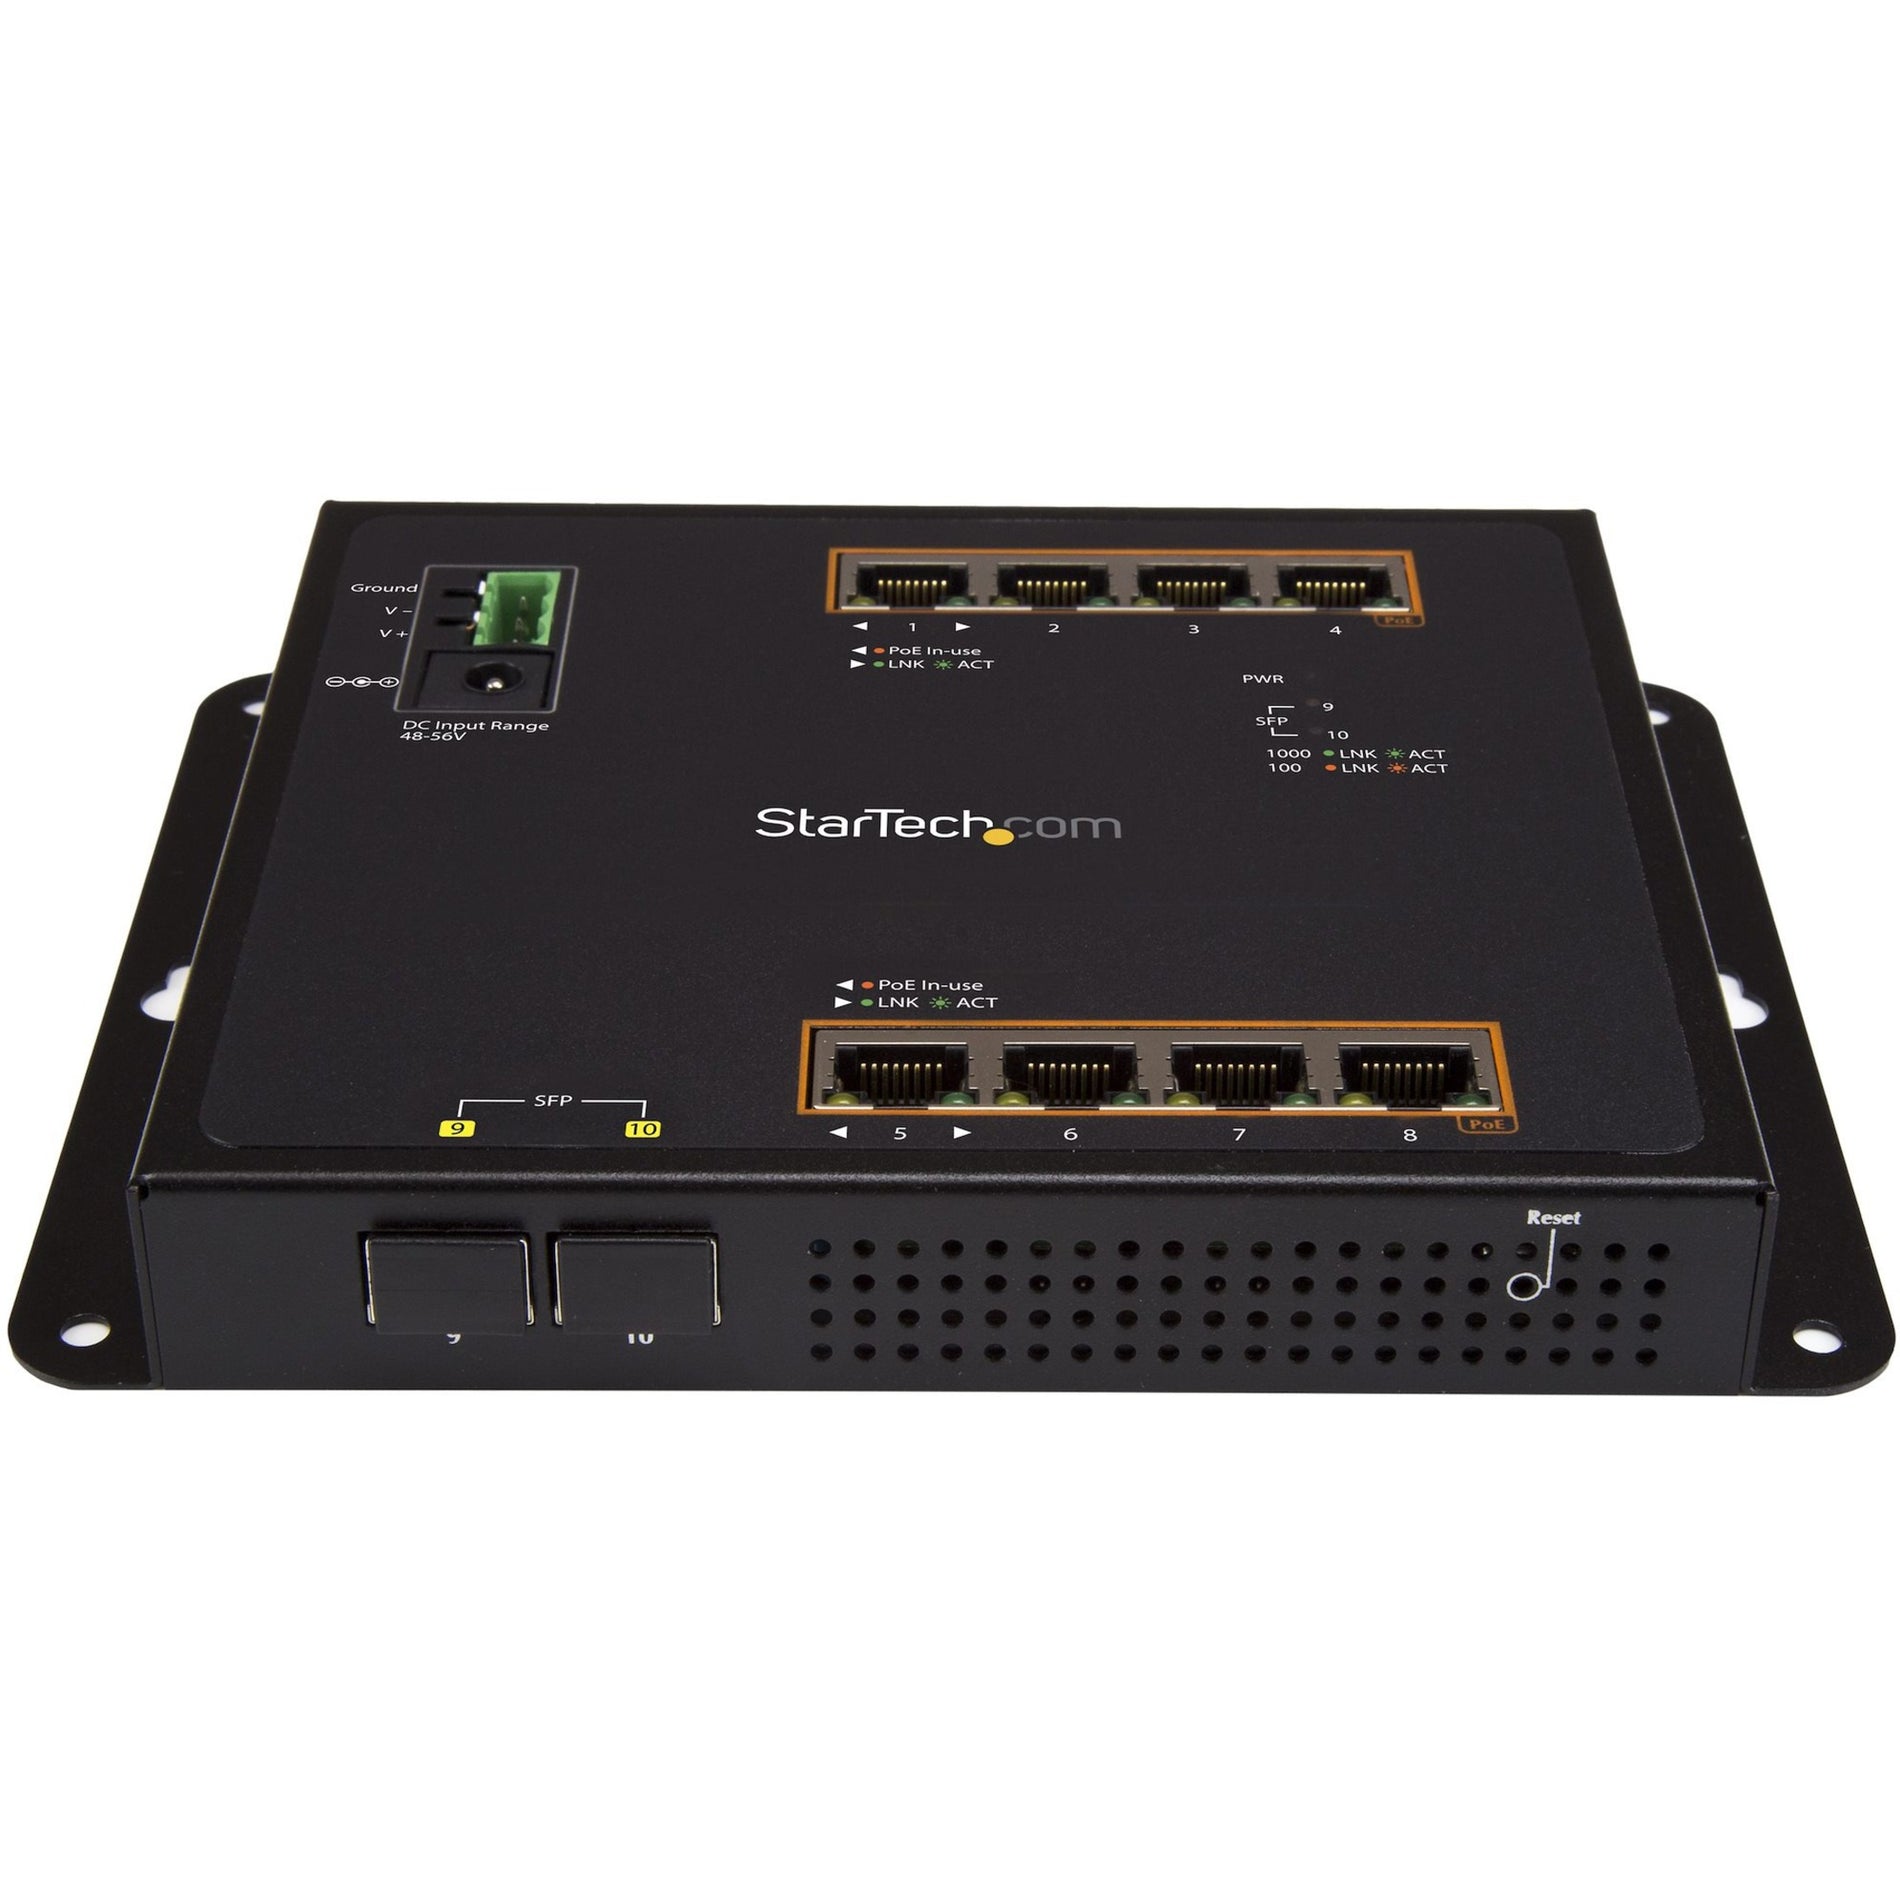 StarTech.com IES101GP2SFW 8-Port Gigabit Ethernet Switch, Industrial Managed Network Switch, Wall Mount